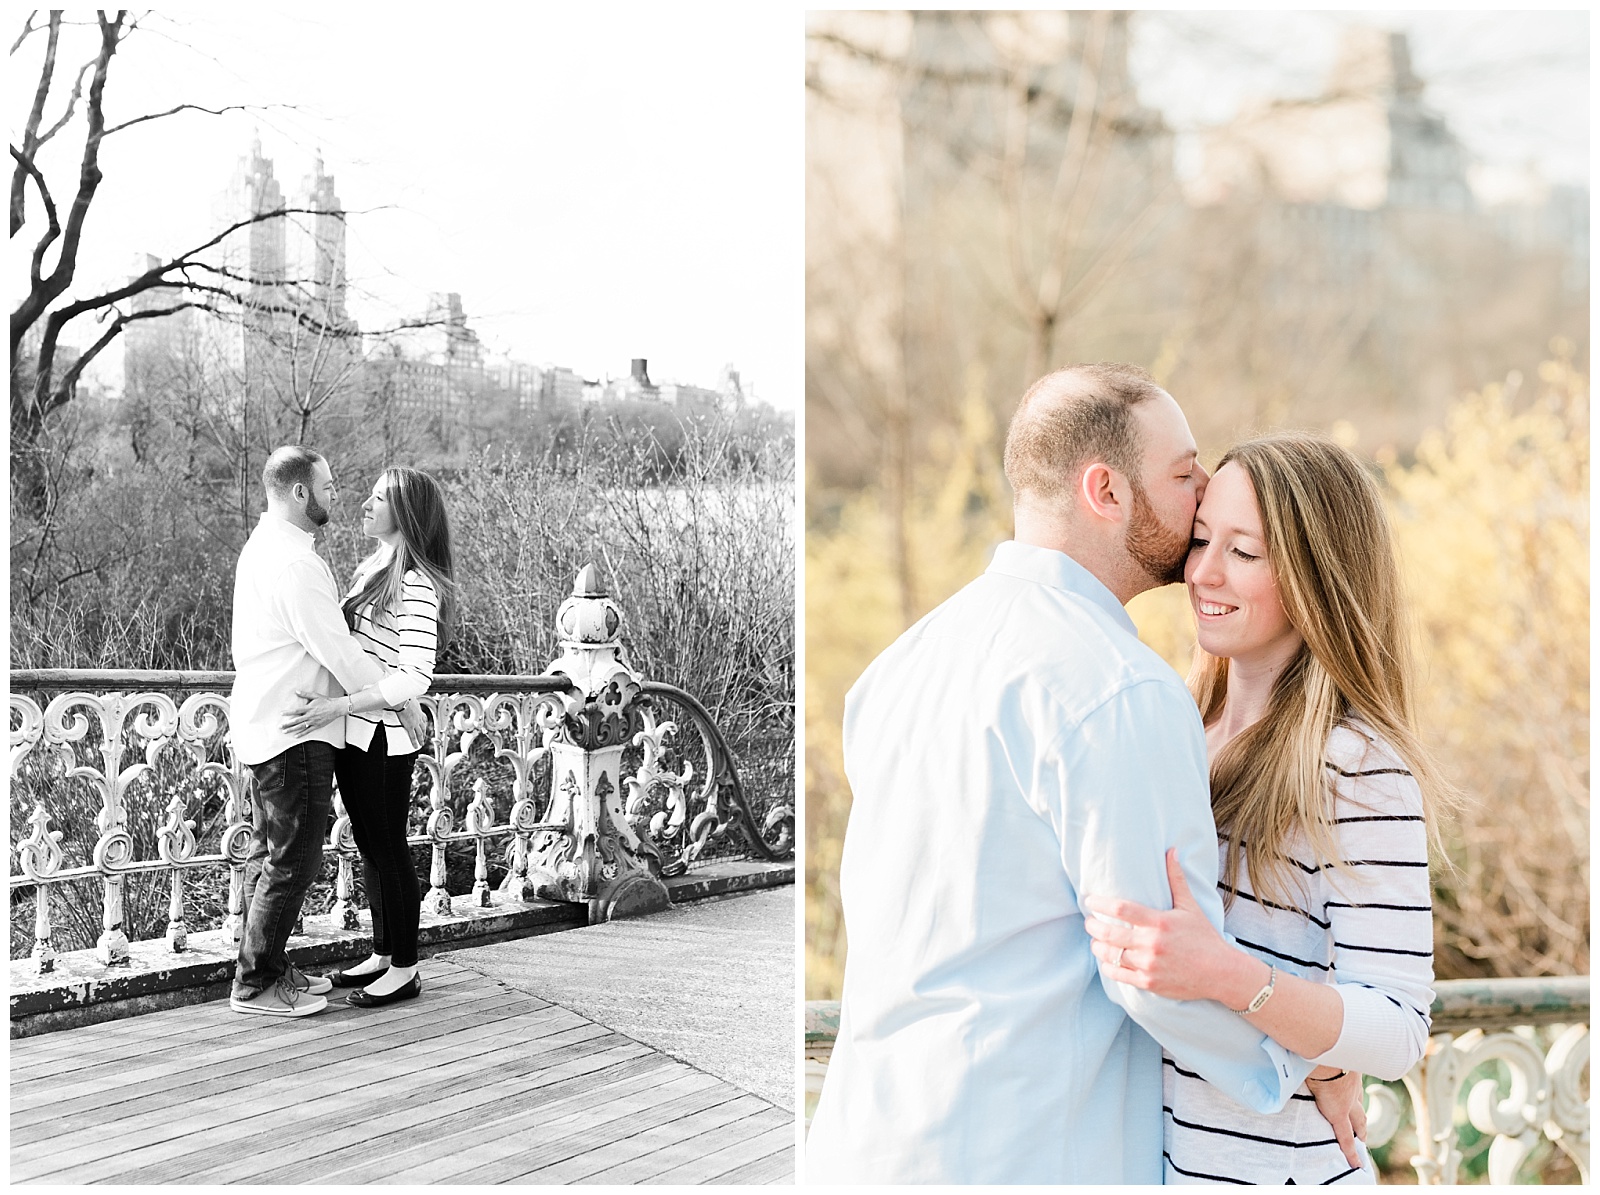 Central Park, NYC engagement session, springtime, wedding photographer, New York,